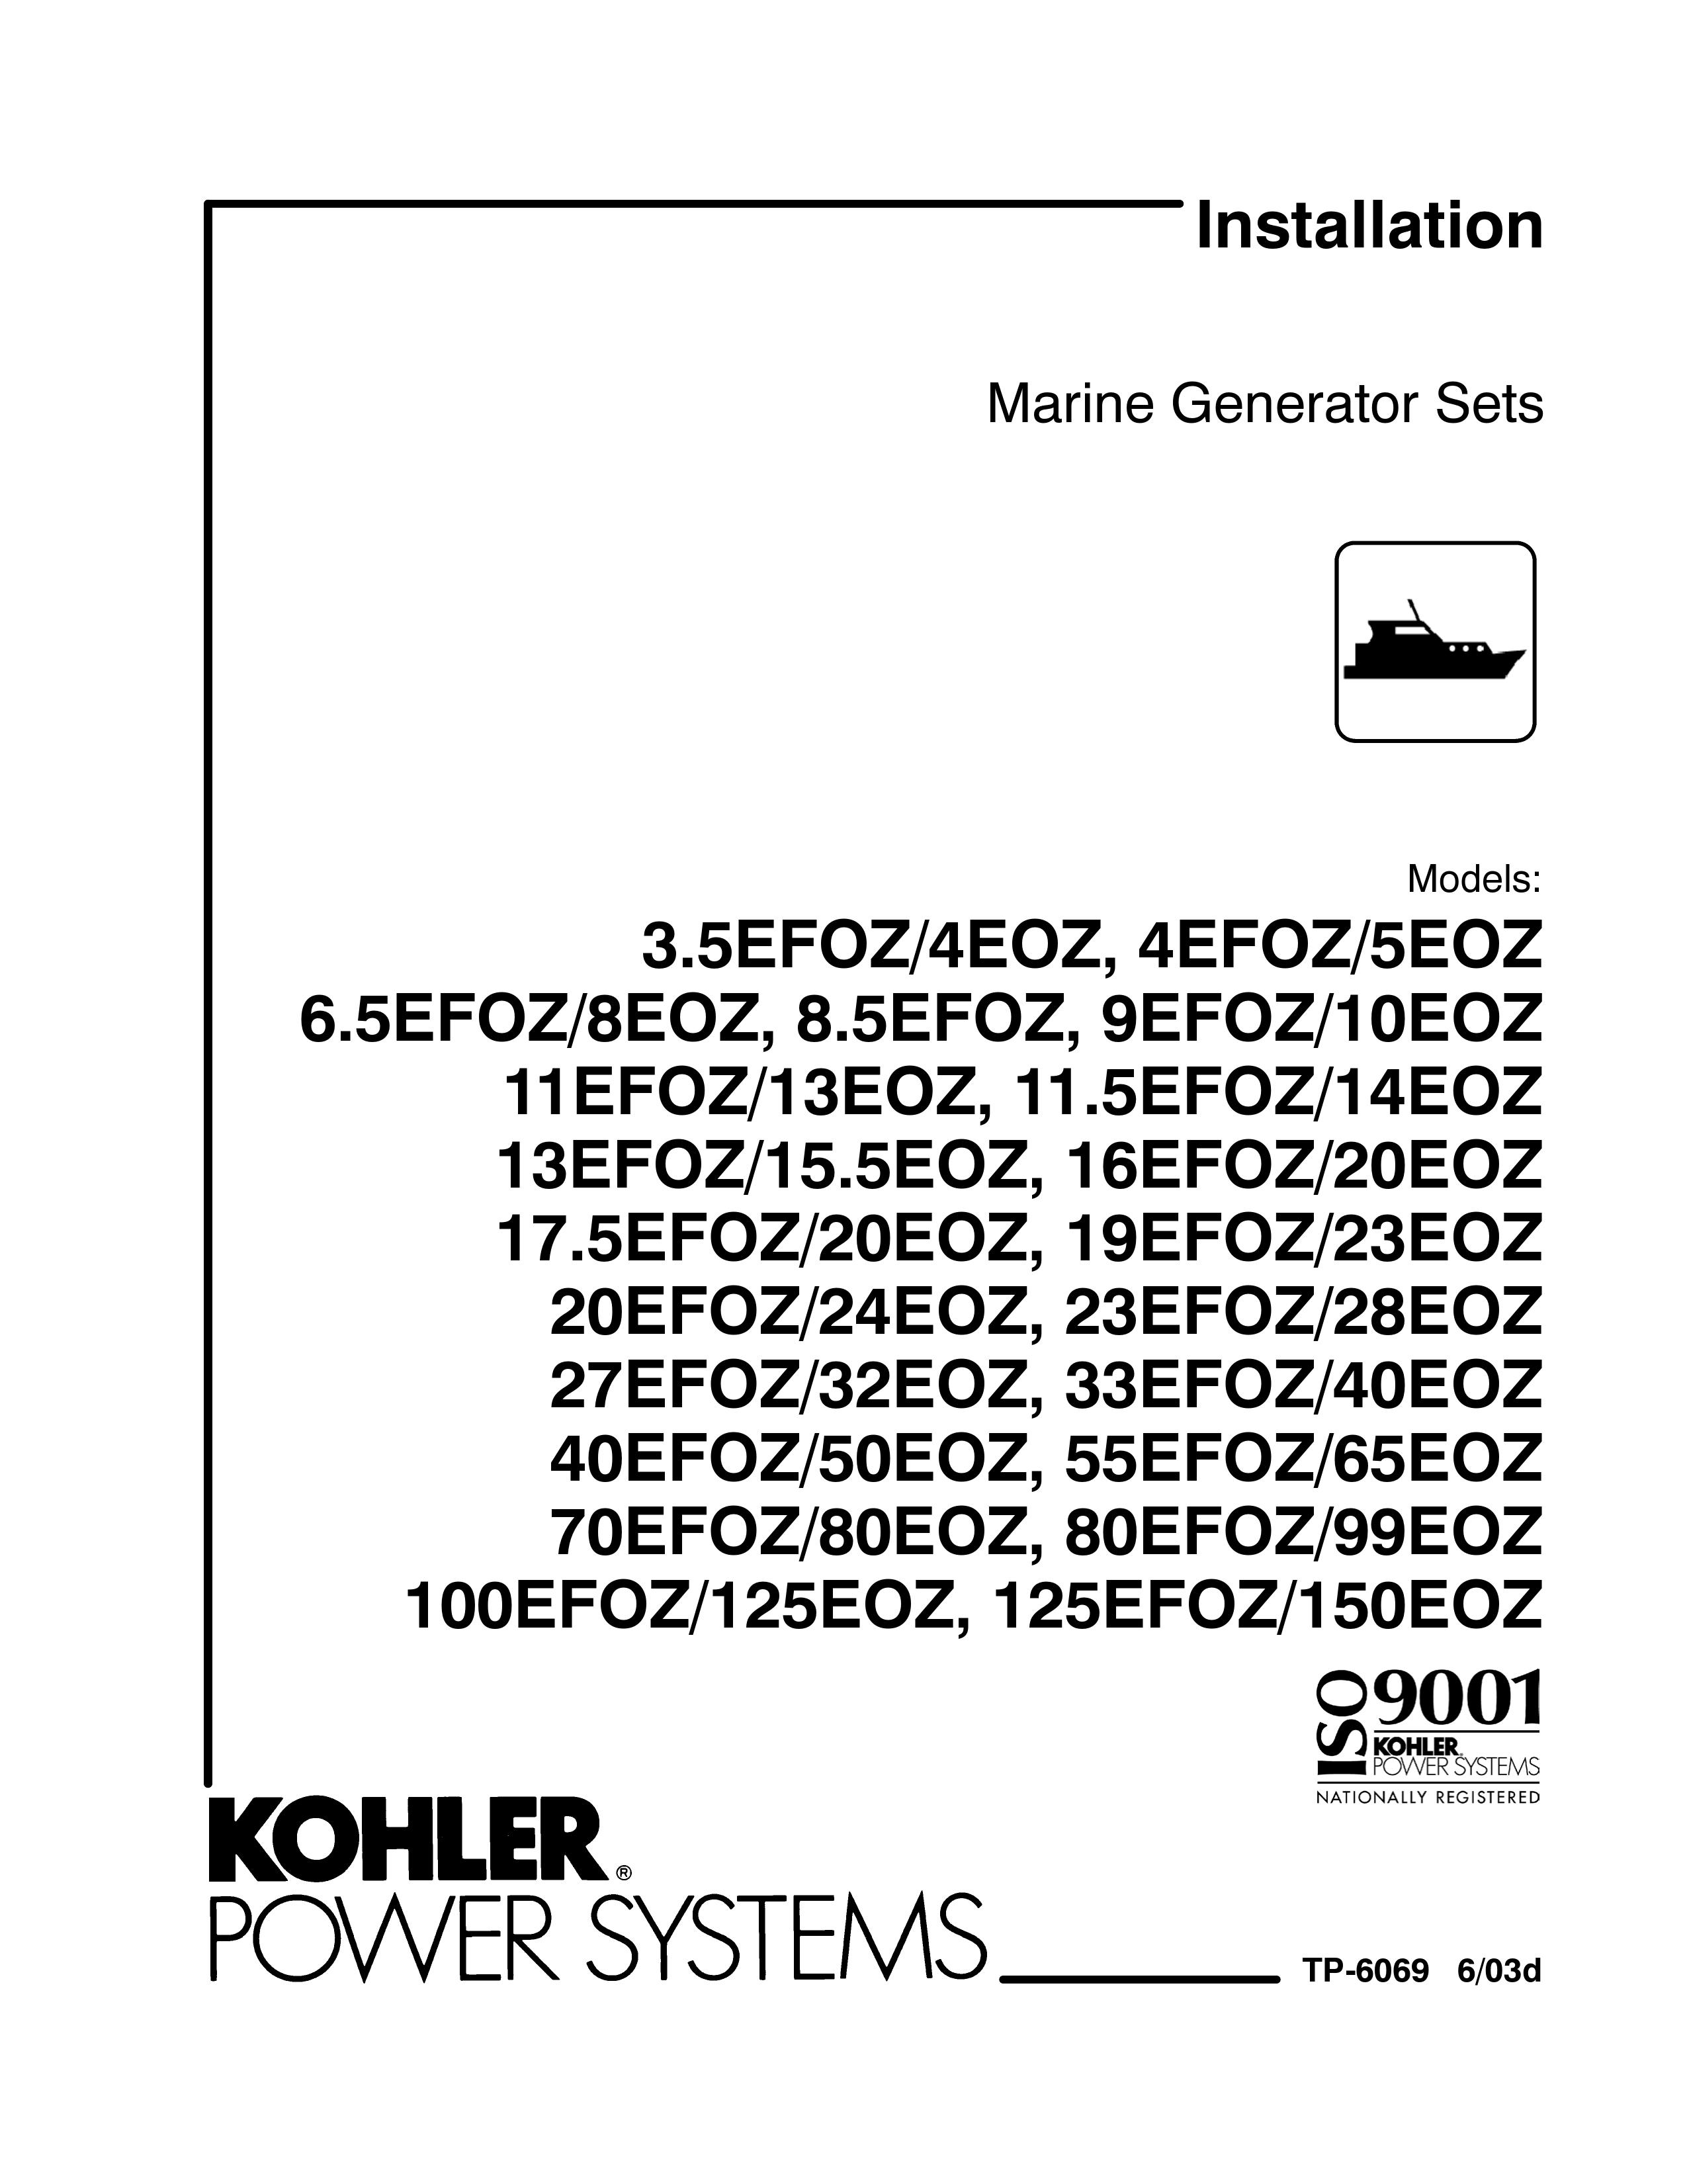 Kohler 11.5EFOZ/14EOZ Portable Generator User Manual